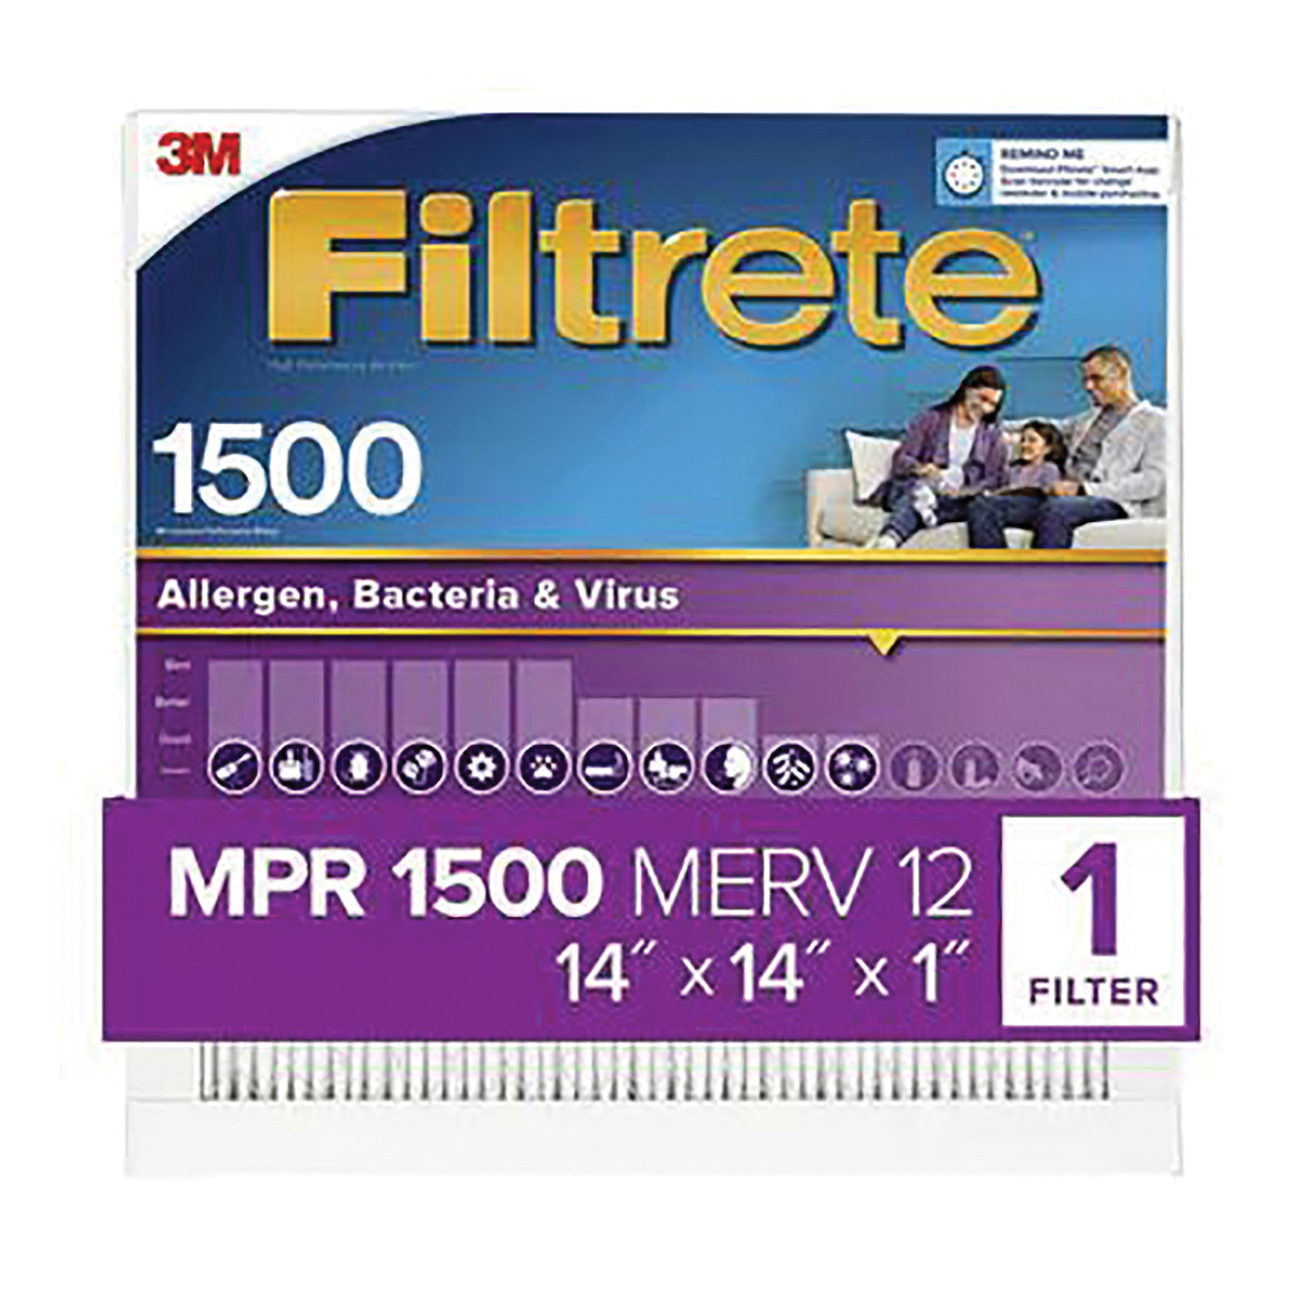 UP11-4 Air Filter, 14 x 14 x 1, 12 MERV, 1500 MPR